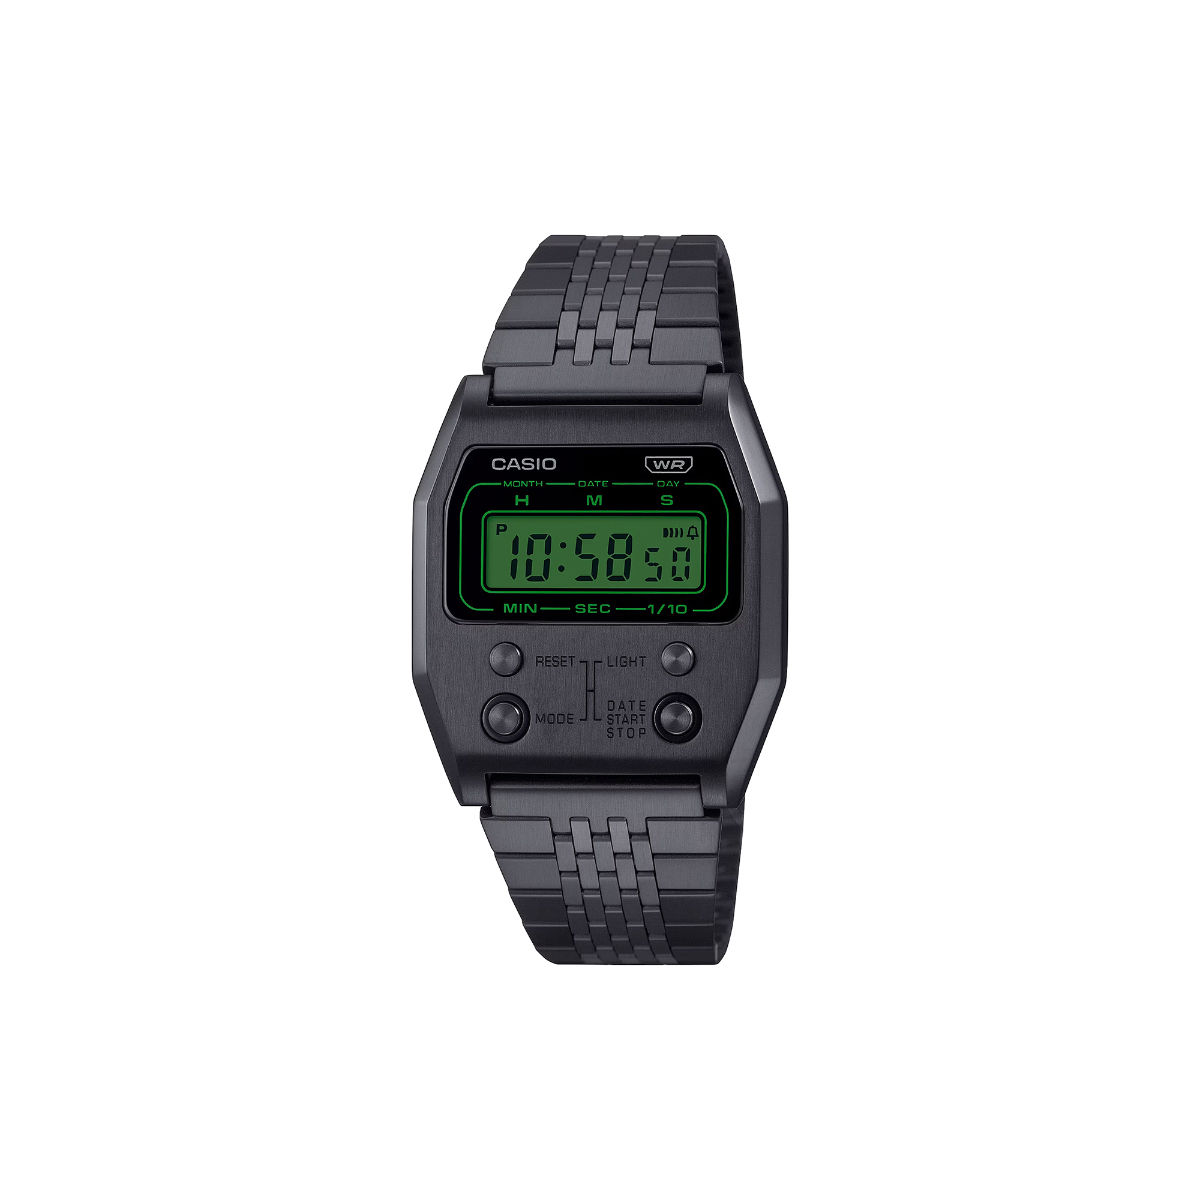 PSR Digital Quartz - Red display - Black stainless steel bracelet |  Hamilton Watch - H52404130 | Hamilton Watch